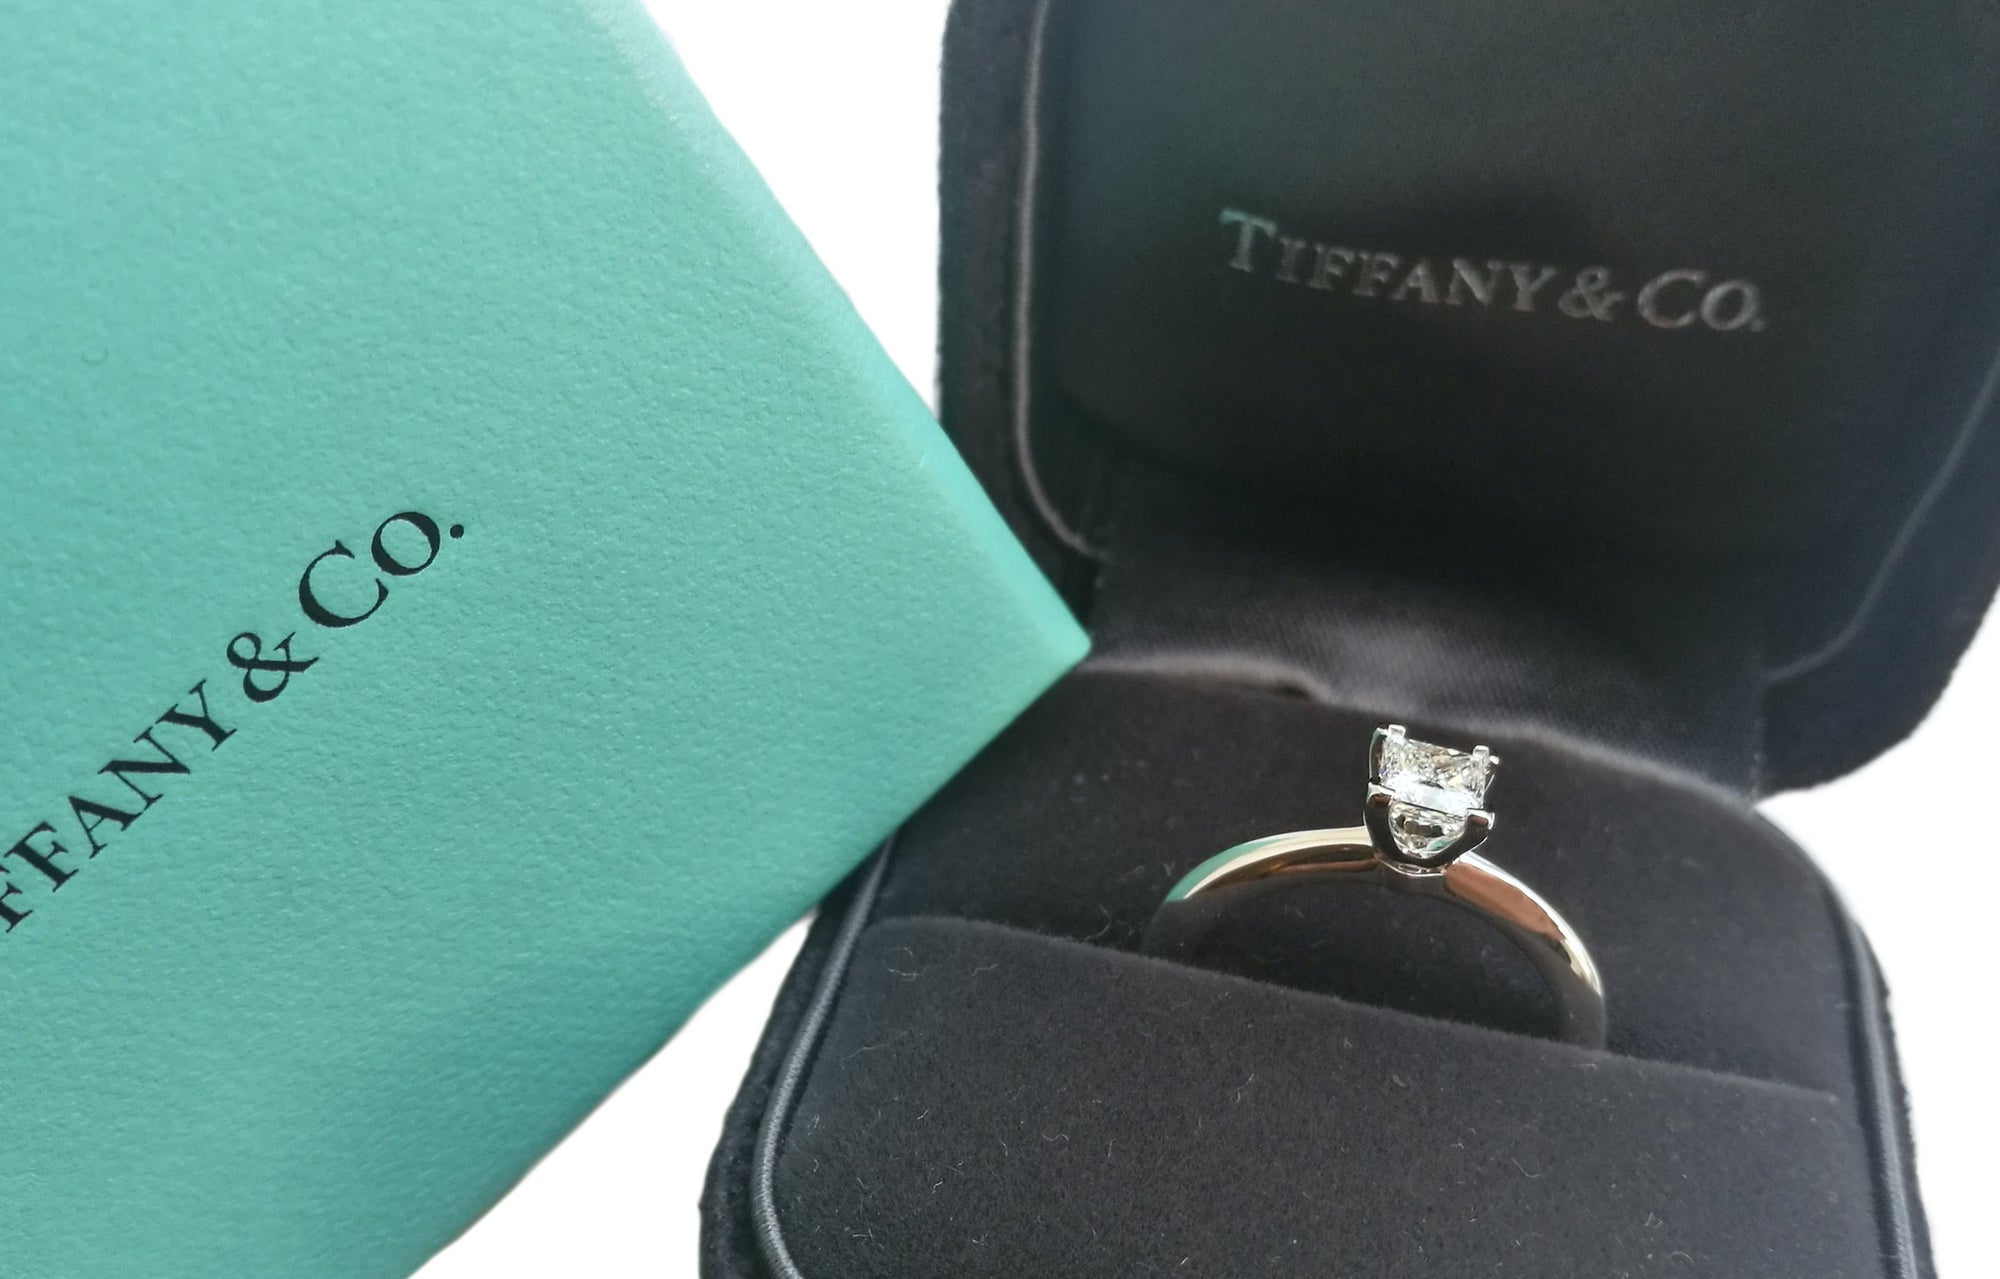 Tiffany & Co. 0.41ct G/SI1 Princess Cut Diamond Engagement Ring